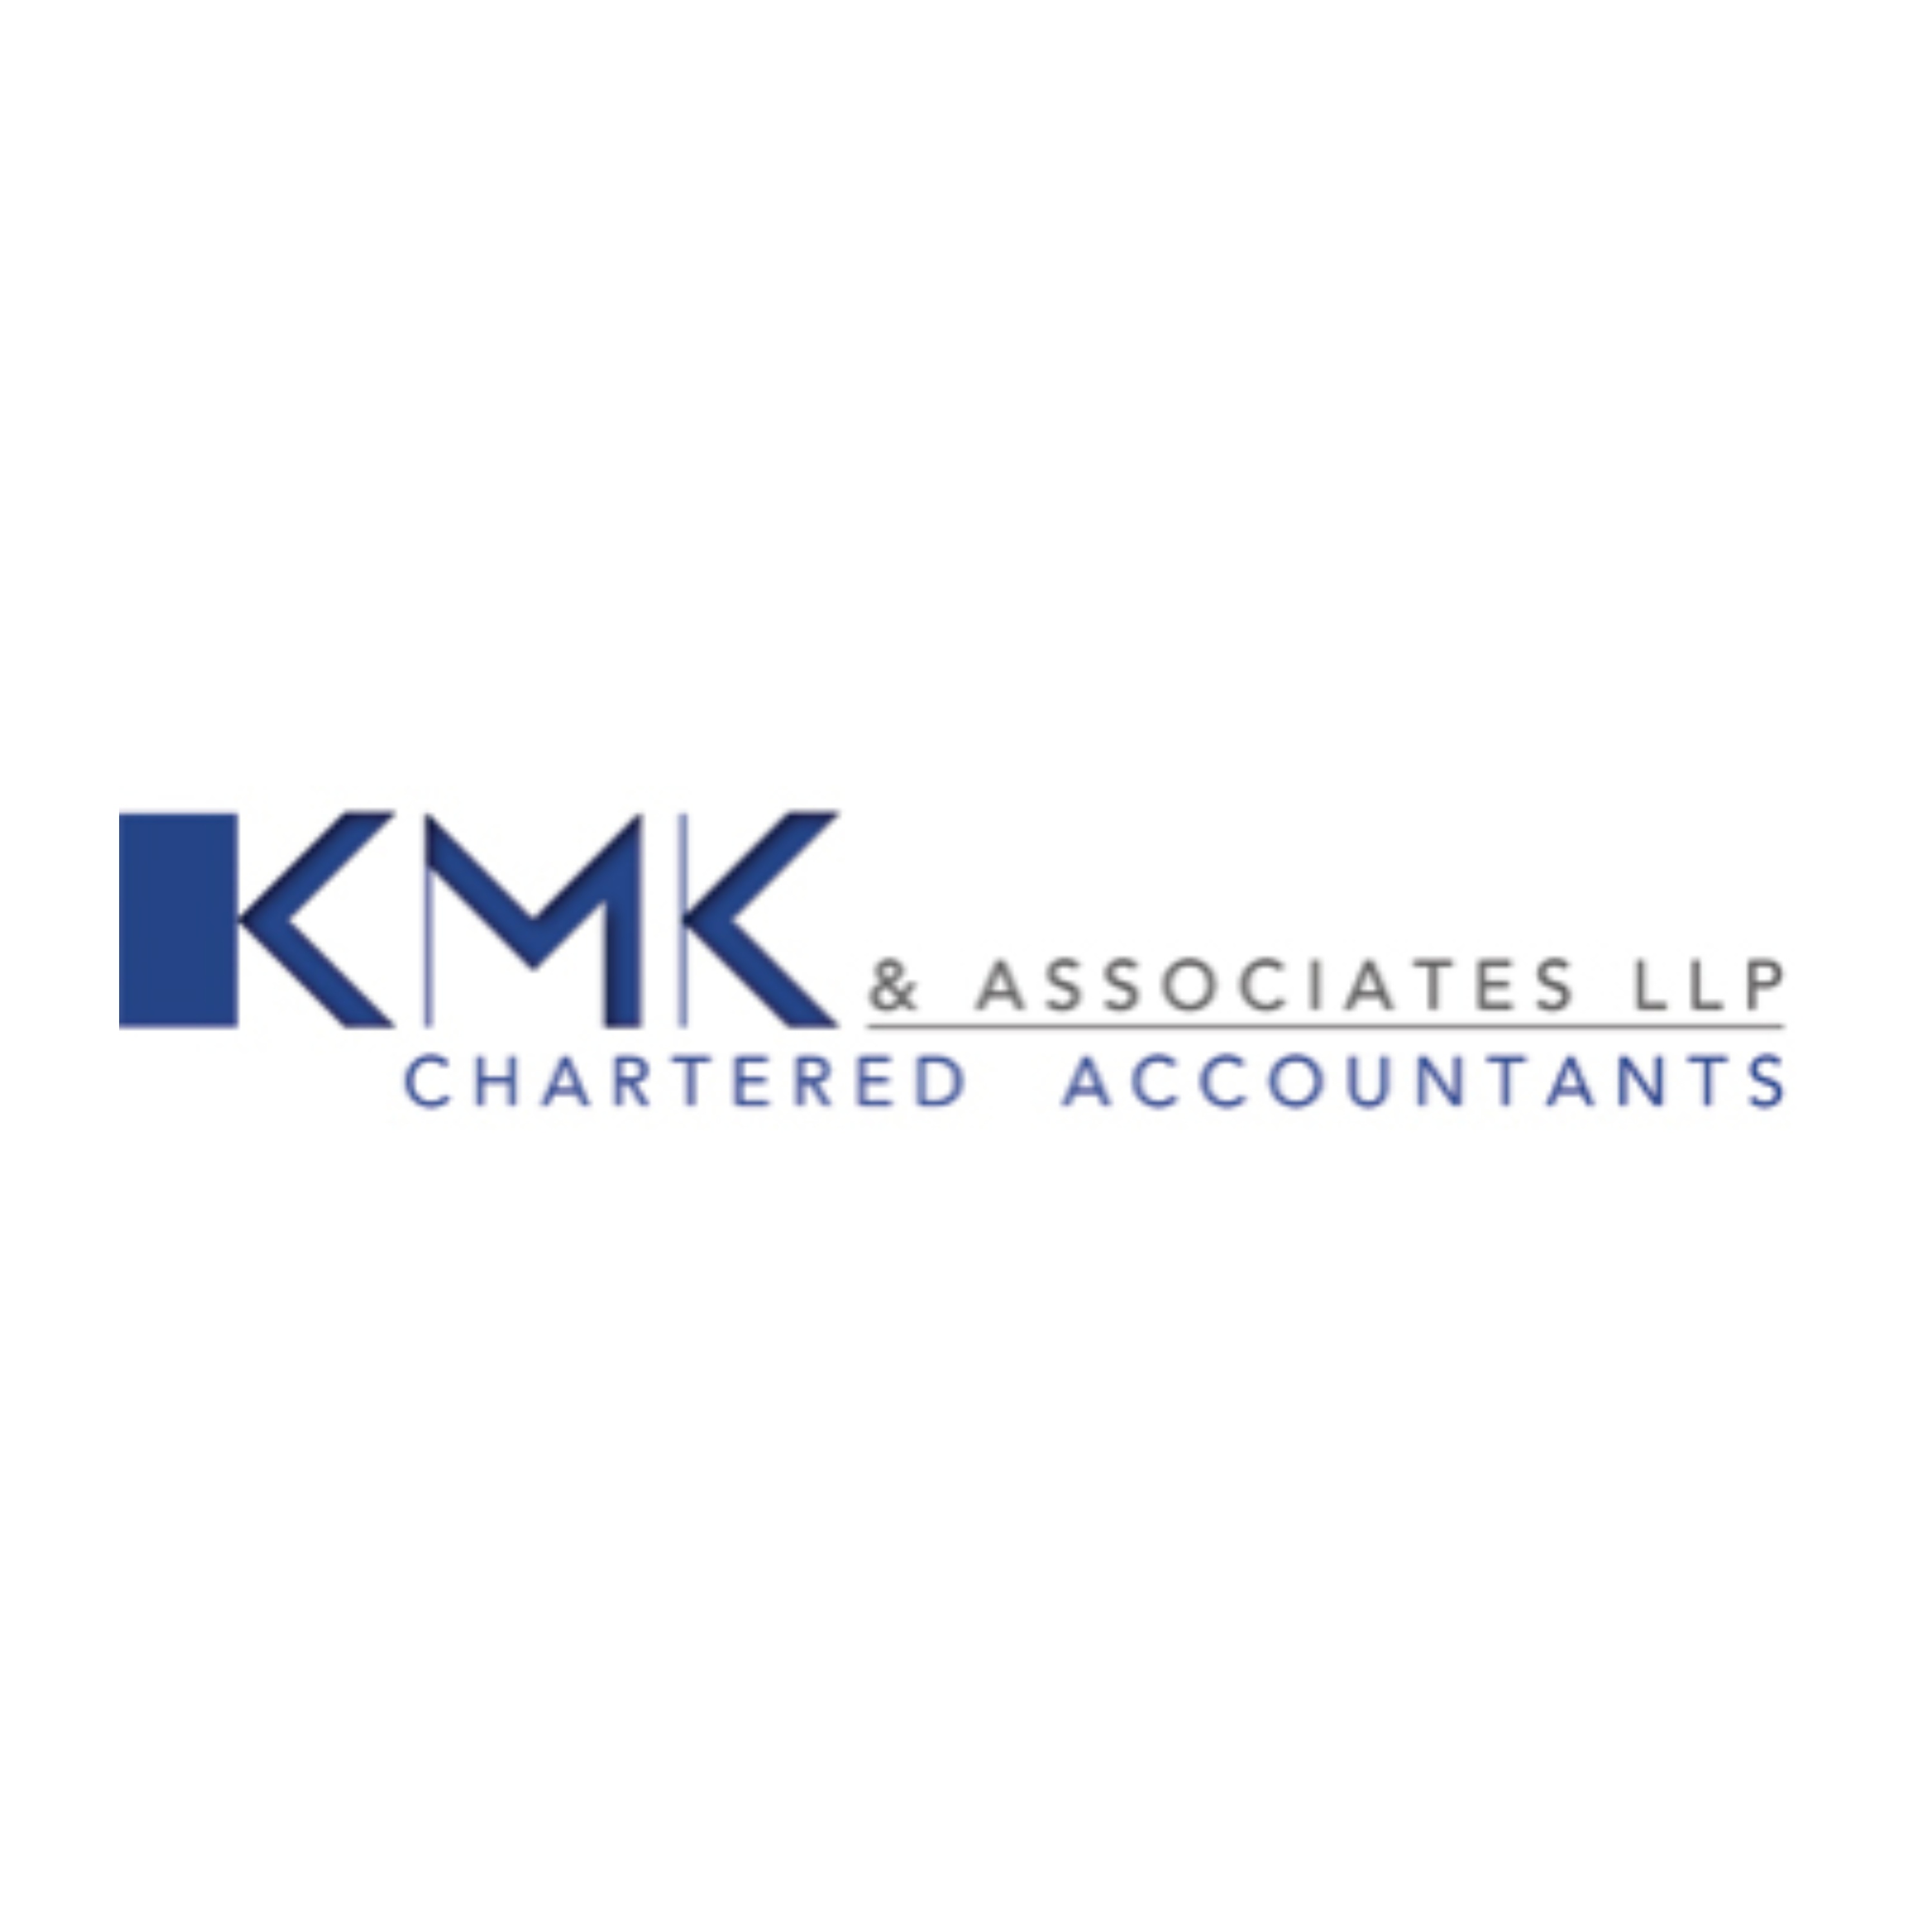 kmk & associates llp | accounting firm in ahmedabad